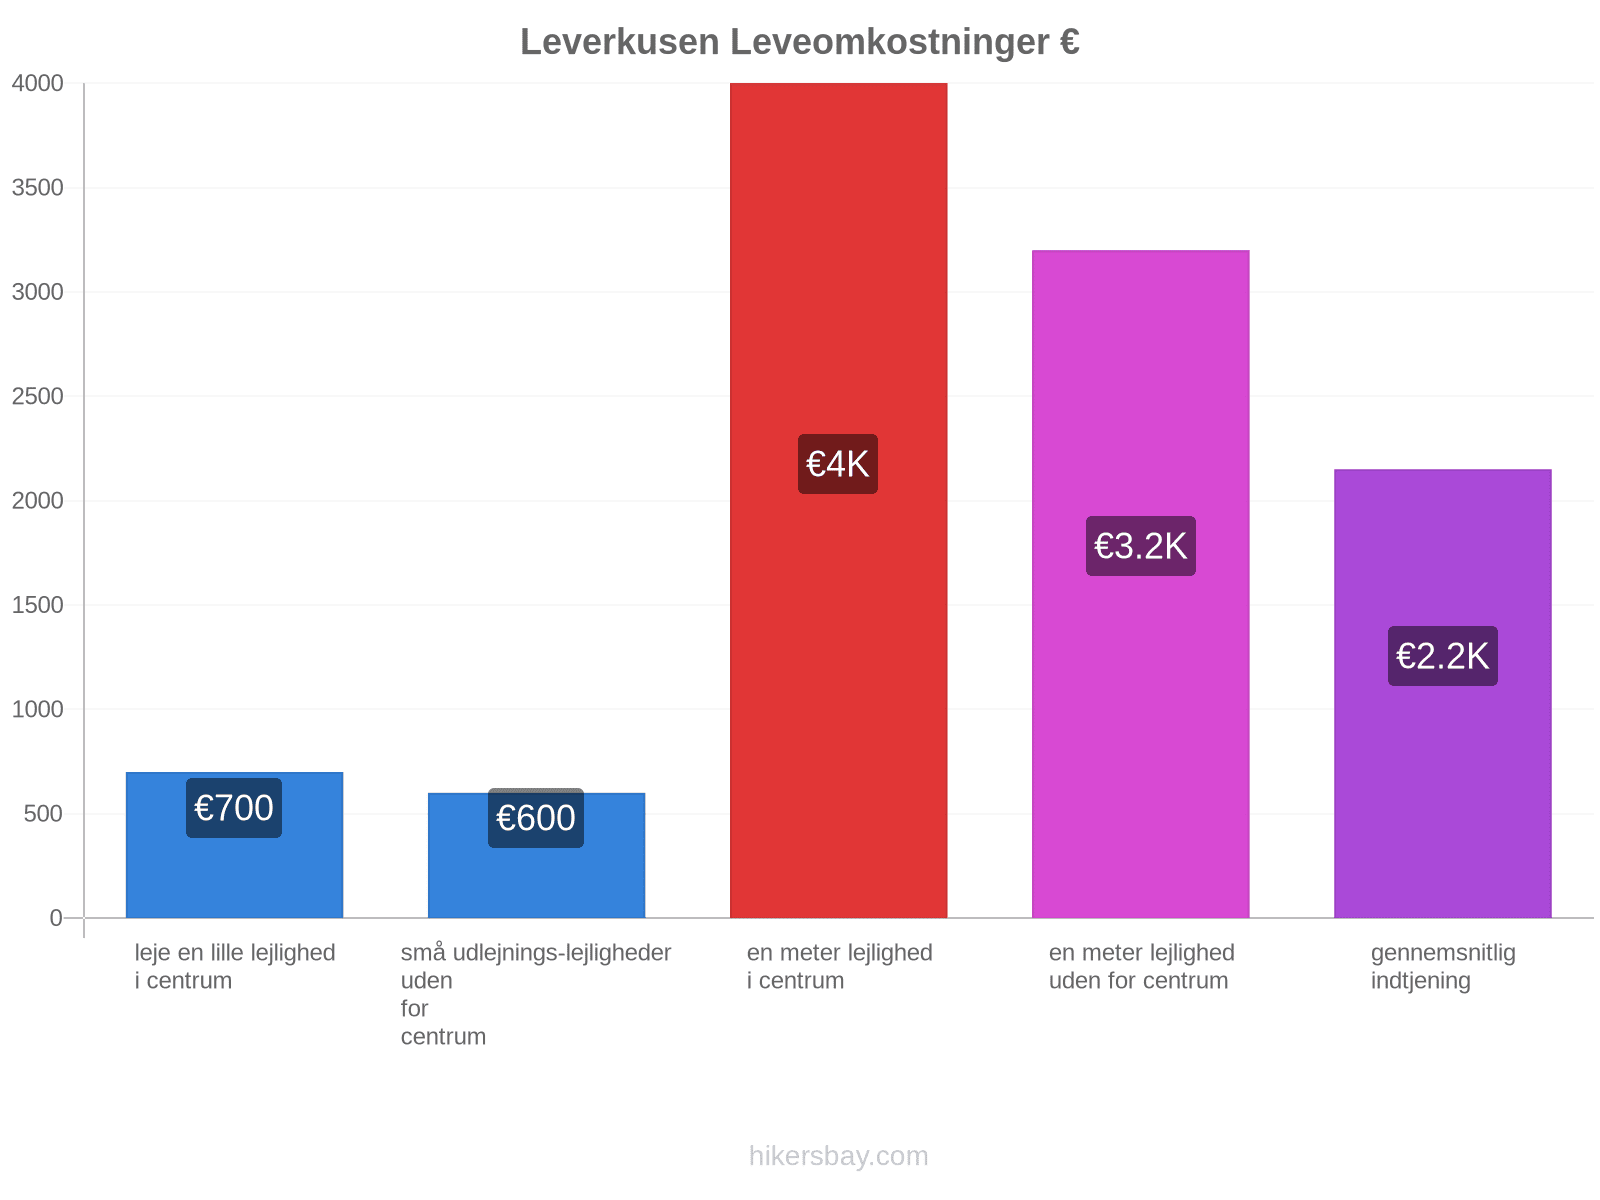 Leverkusen leveomkostninger hikersbay.com